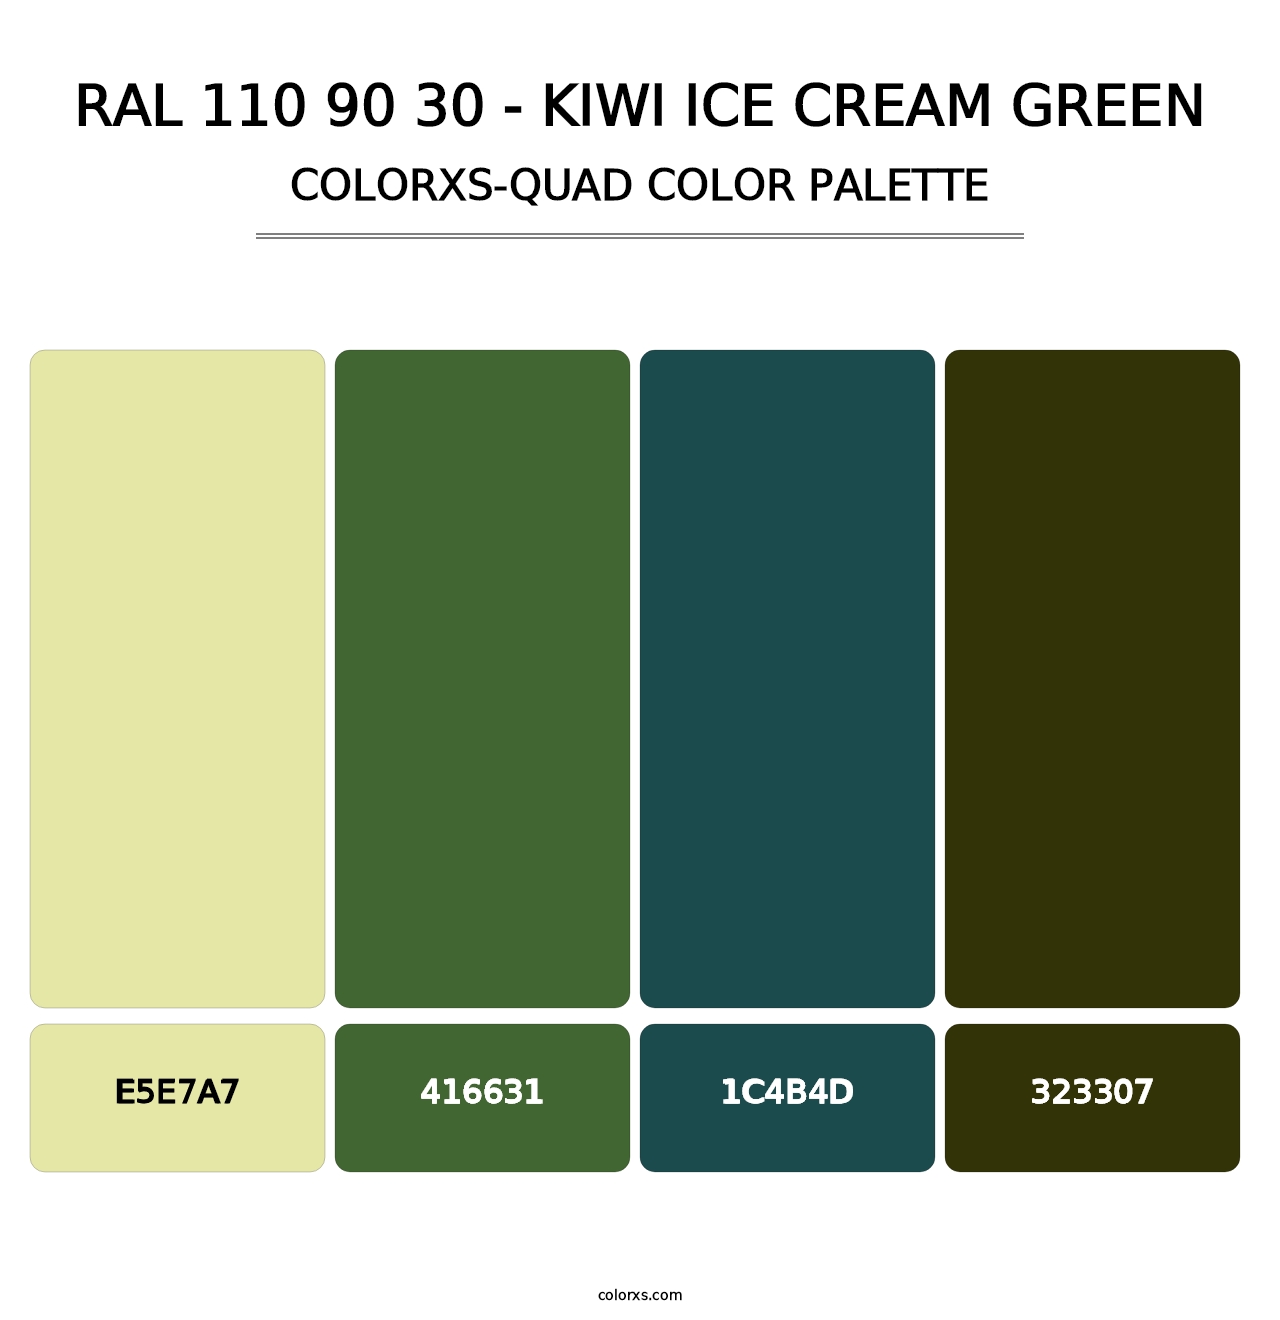 RAL 110 90 30 - Kiwi Ice Cream Green - Colorxs Quad Palette